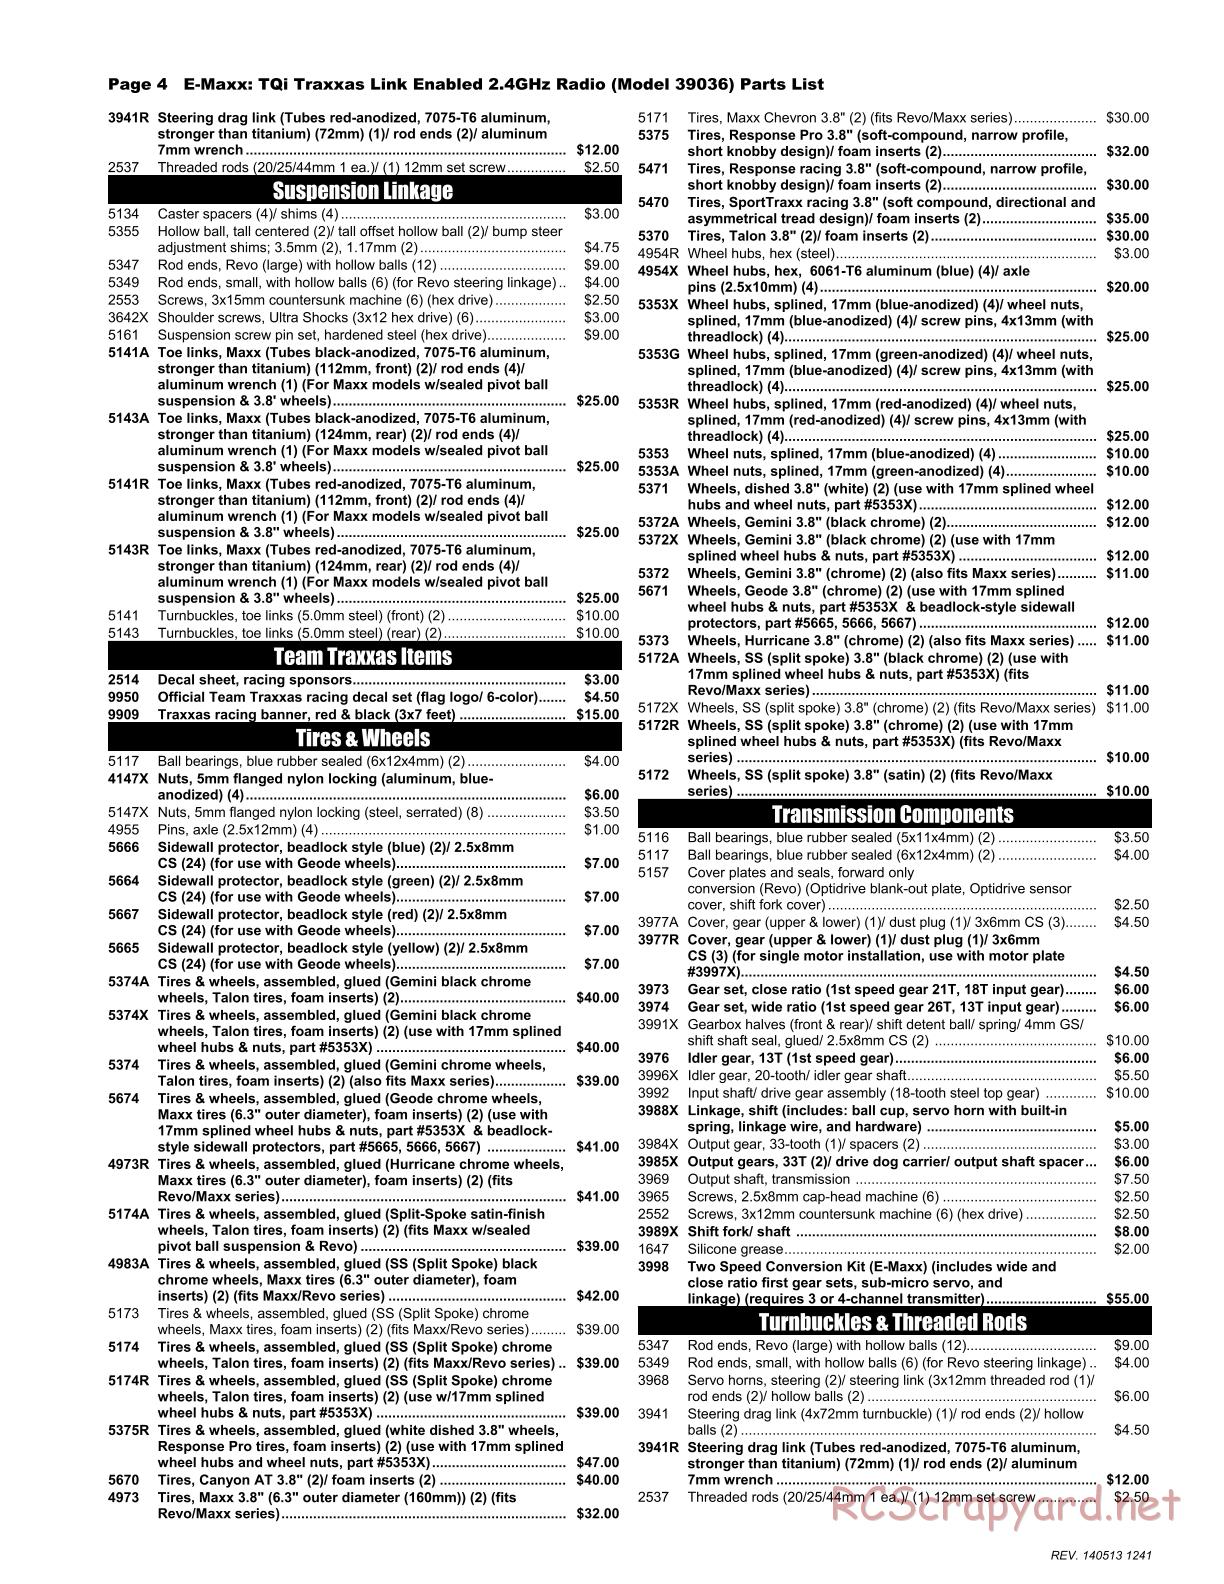 Traxxas - E-Maxx (2014) - Parts List - Page 4